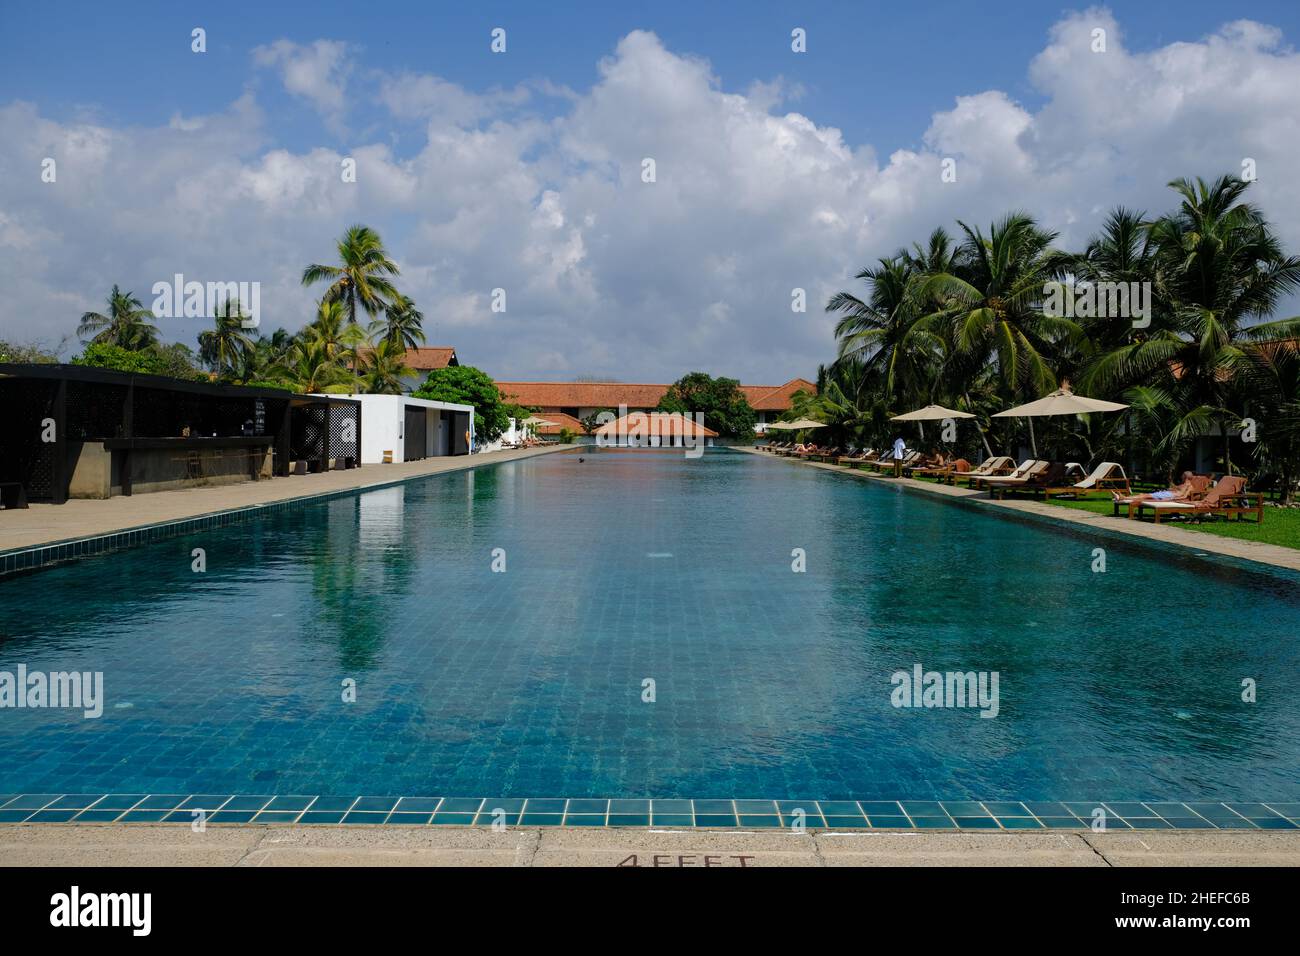 Sri Lanka Negombo - Pamunugama Beach - Jetwing Lagoon Lagoon 100 m pool Stock Photo